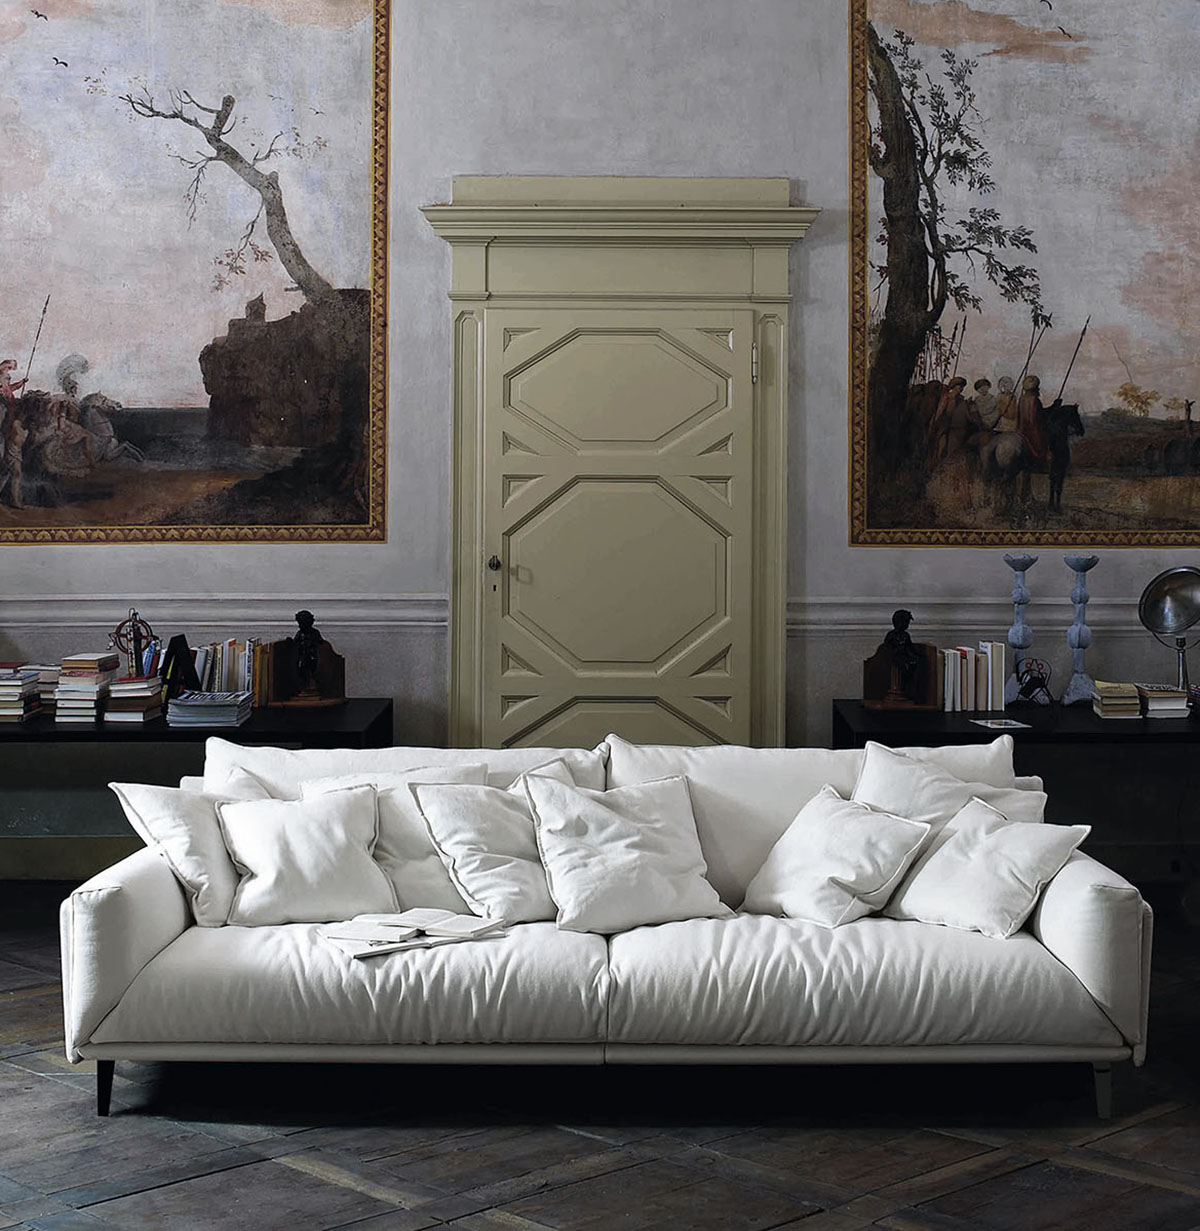 arflex-Faubourg-sofa-design-Carlo-Colombo-tessido-pele-estar-hospitalidade-projeto-luxo-dueposti-treposti-madeinitaly-removivel-moderno-Contemporaneo